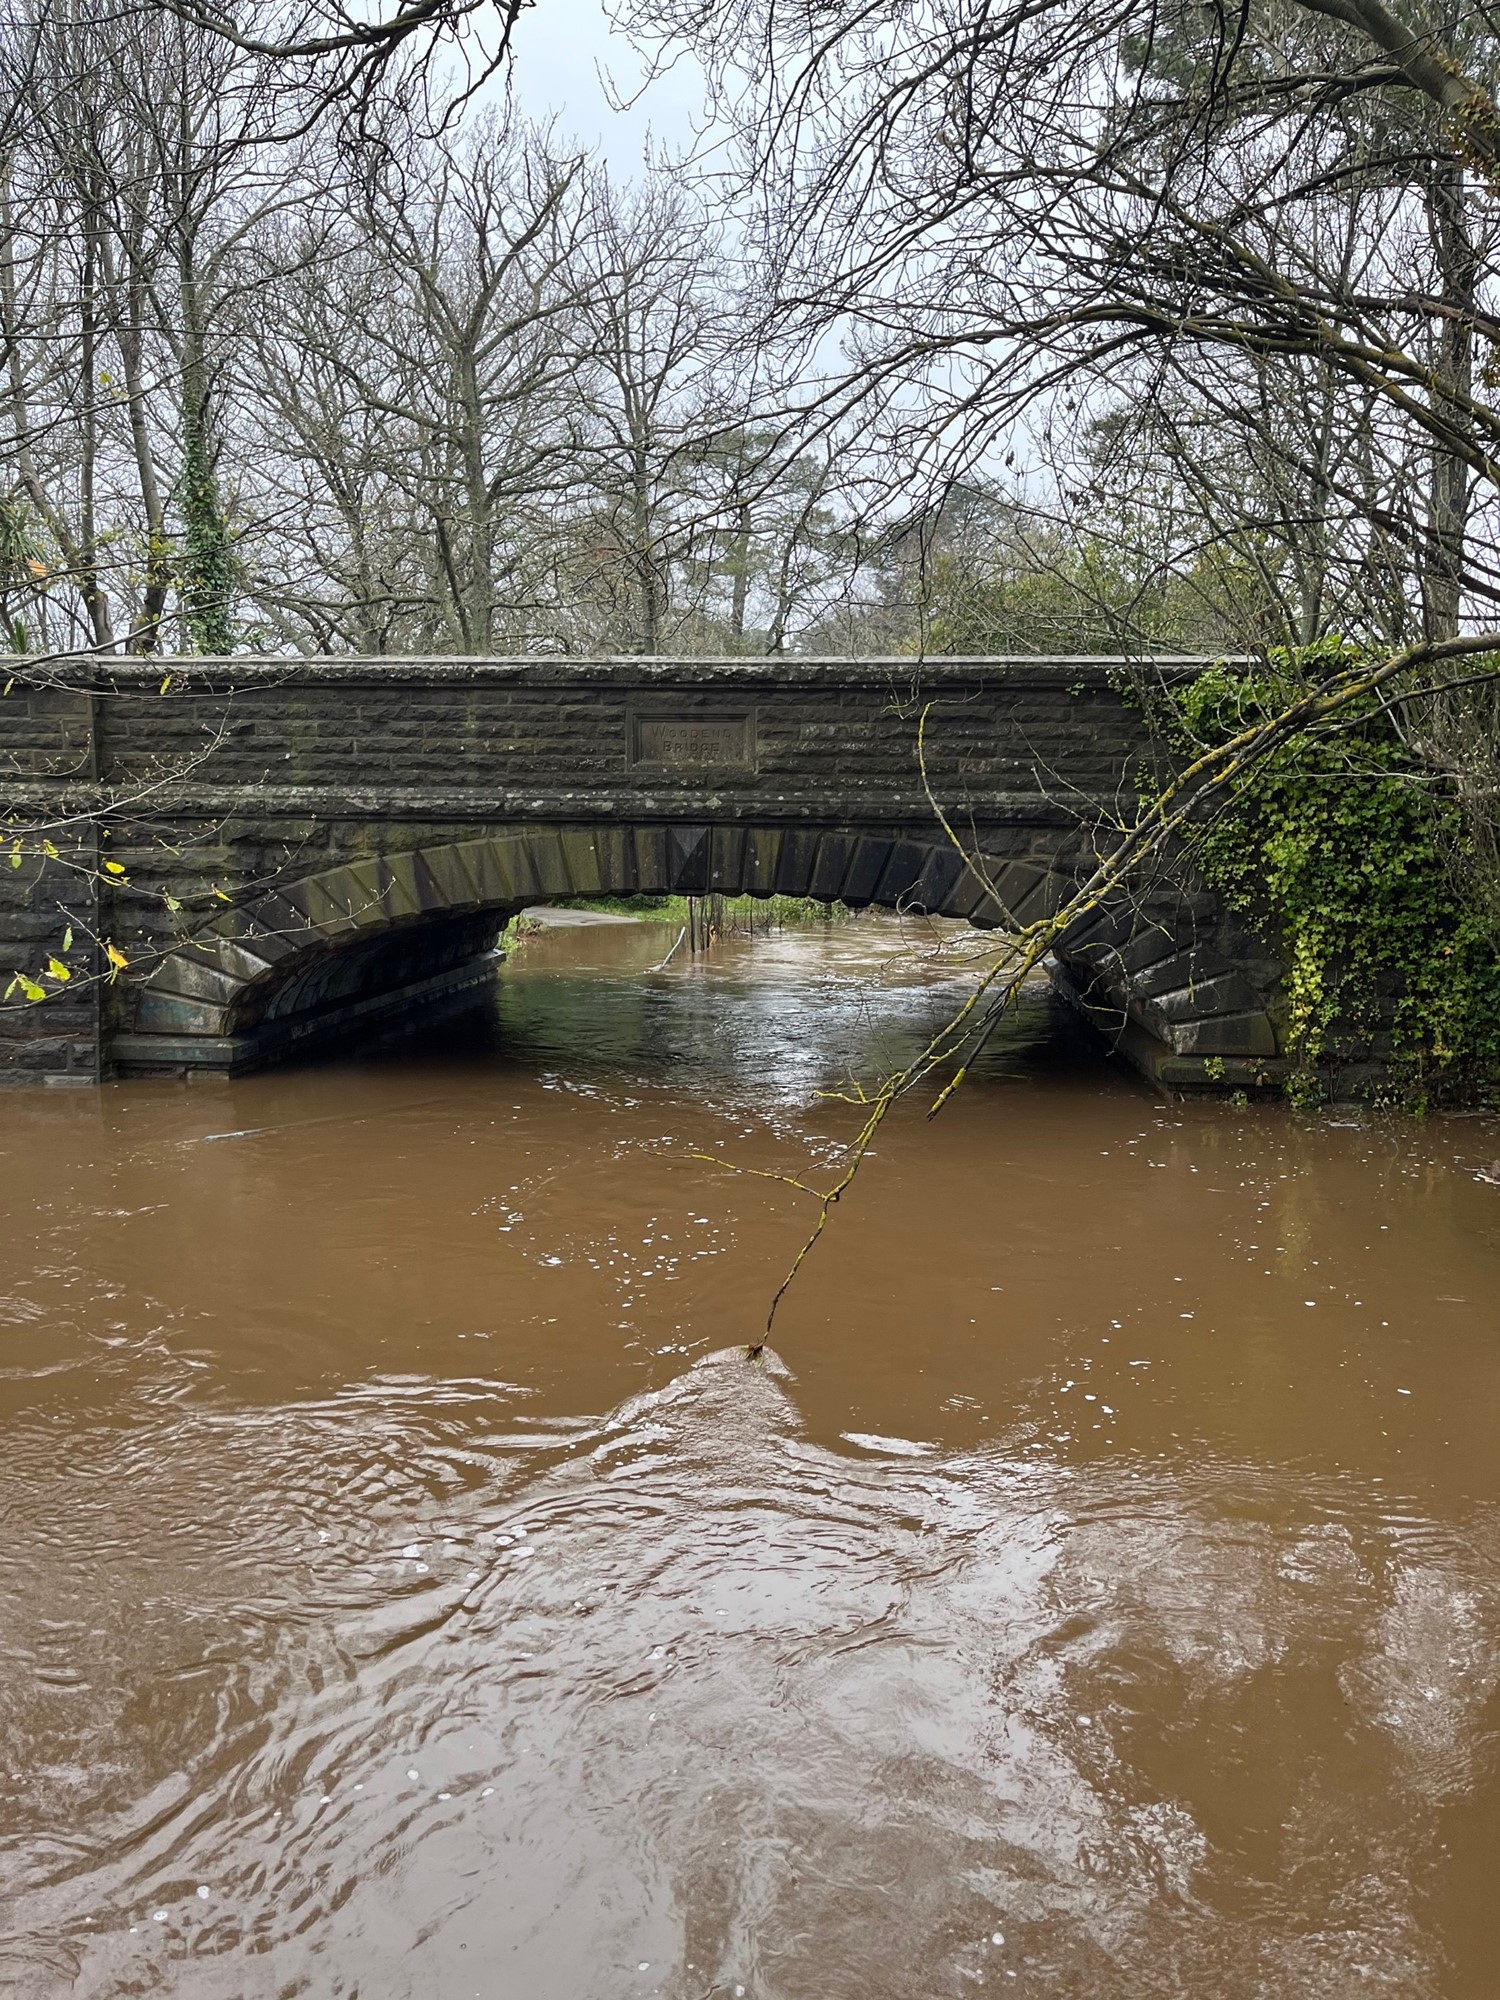 Water is flowing under a bridge